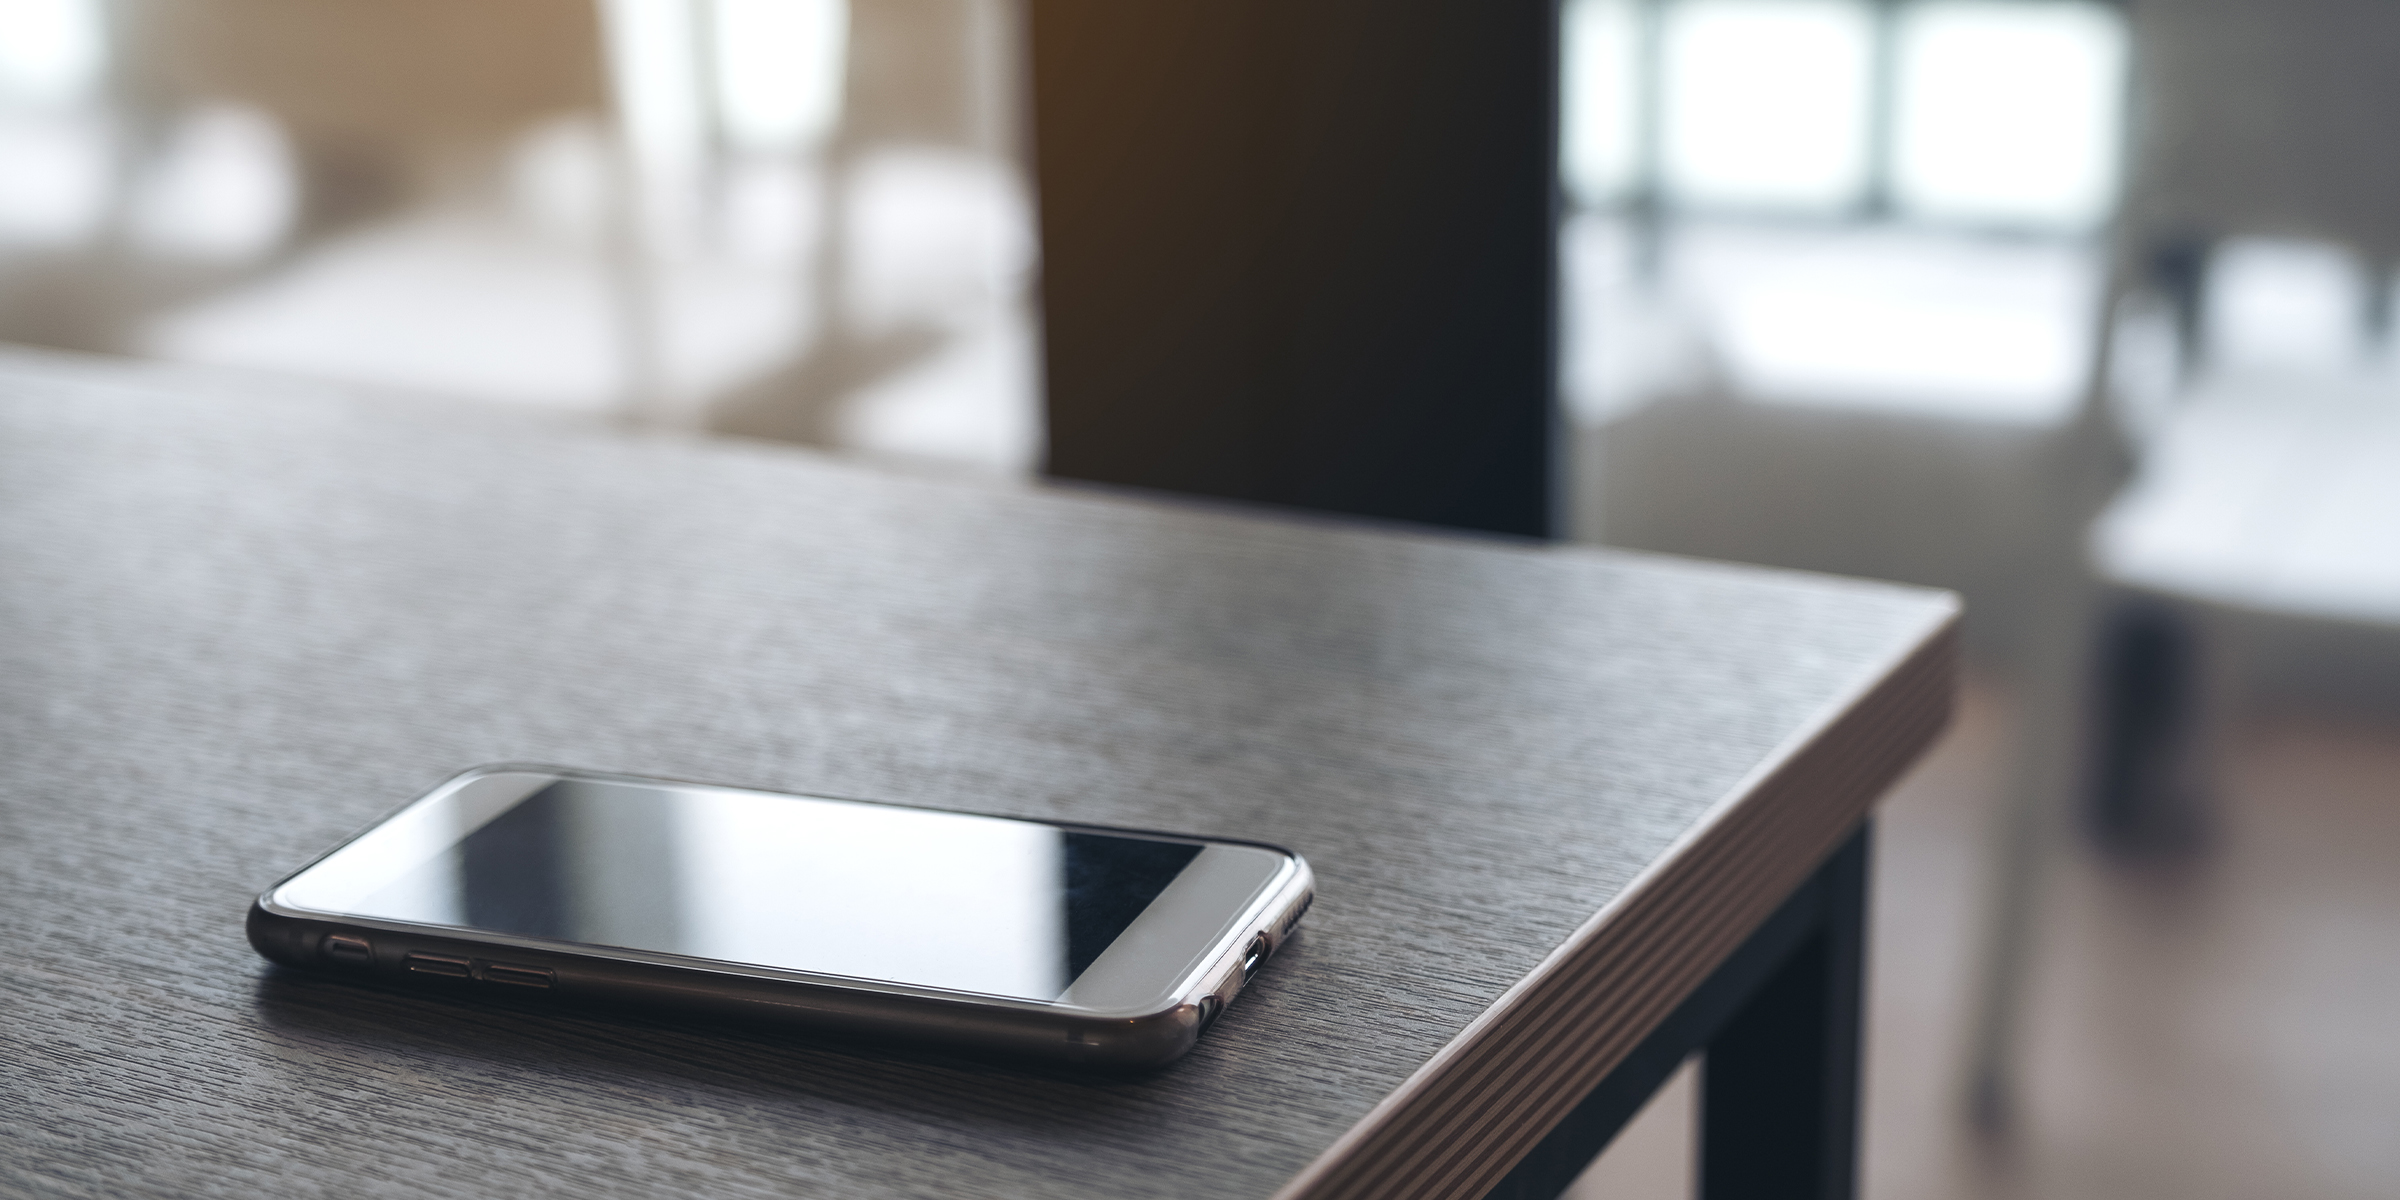 Un smartphone sobre la mesa | Fuente: Shutterstock